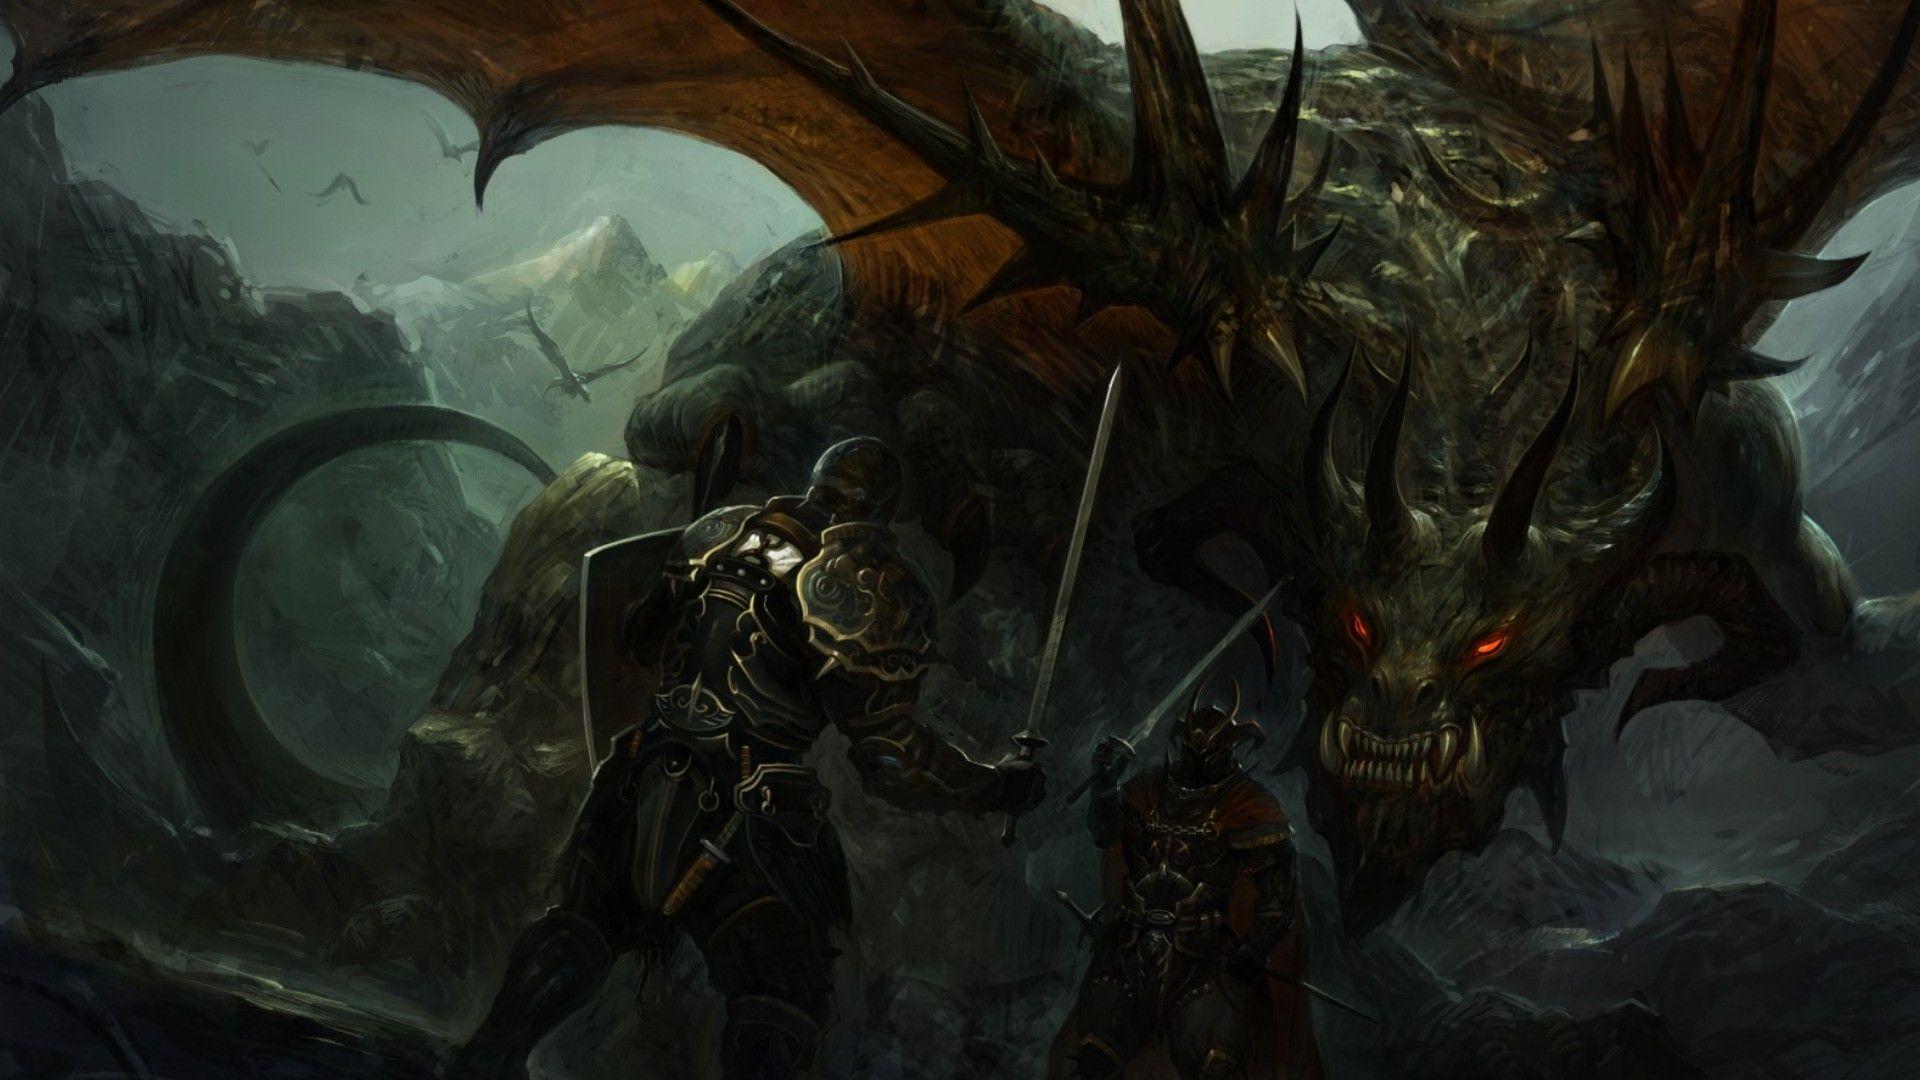 Dark Evil Dragons Wallpaper Free Download HD